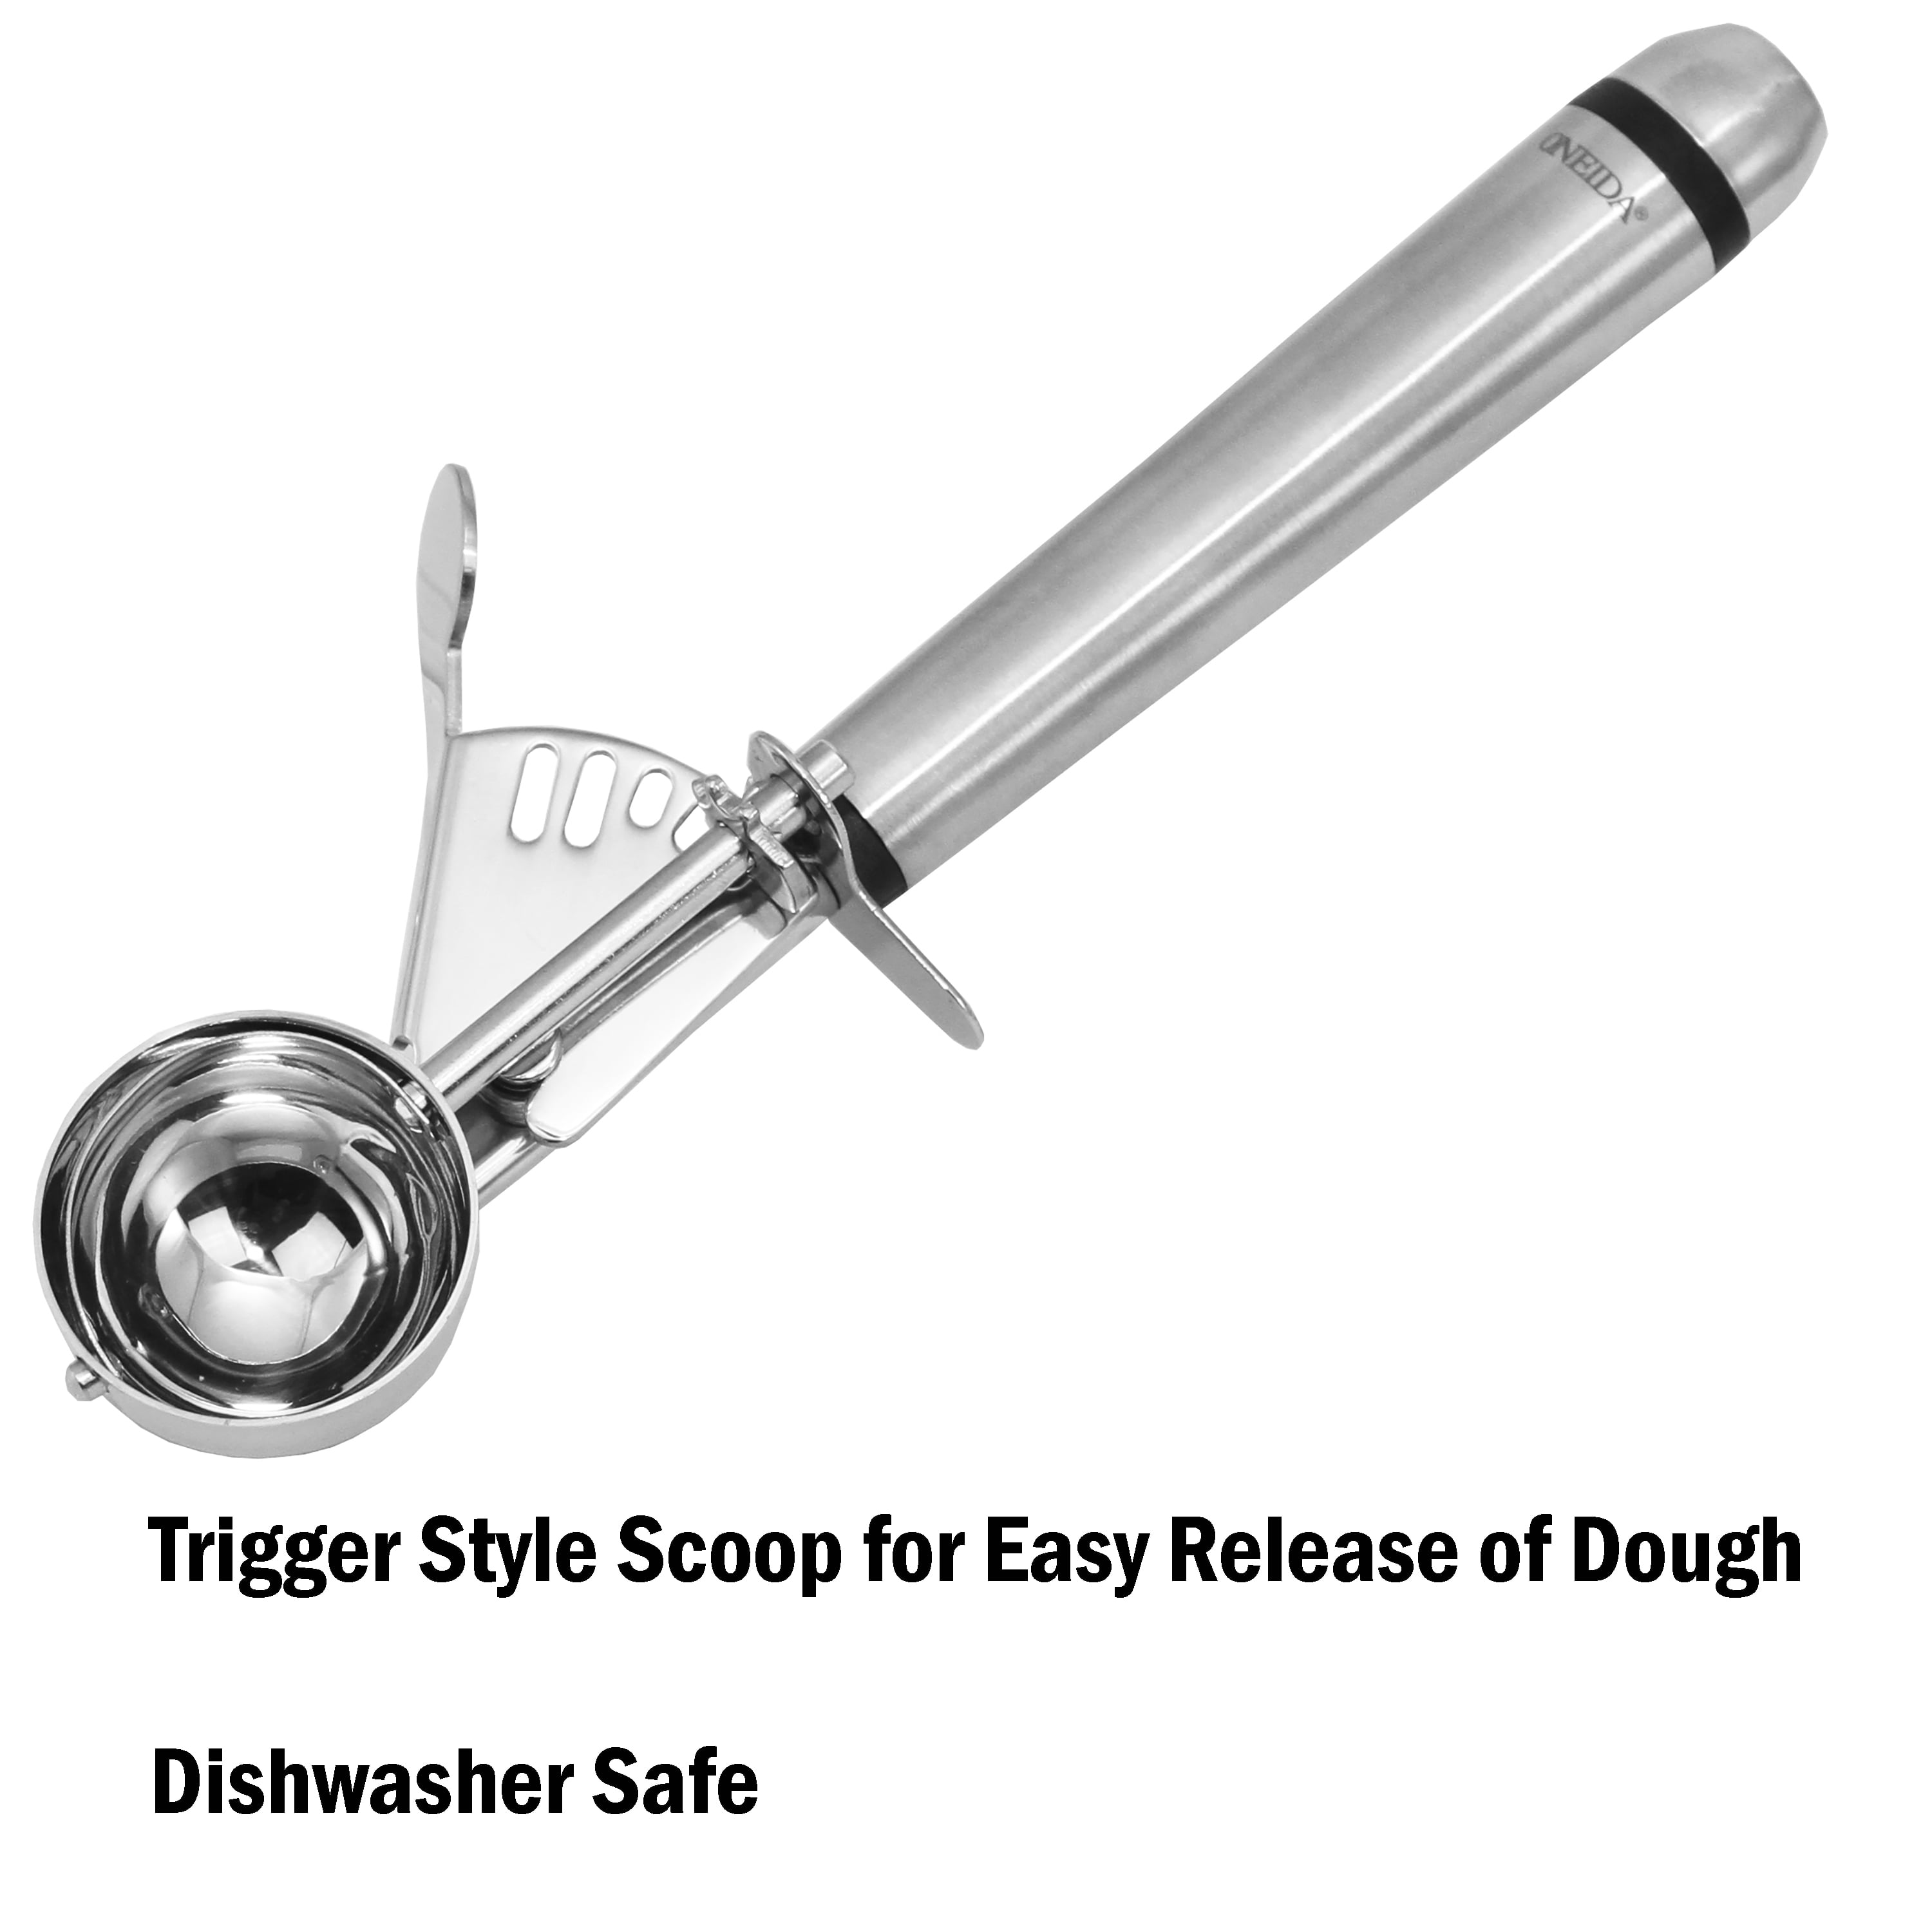 Oneida Trigger Cookie Scoop 58040onbl Dishwasher Safe .5oz Capacity